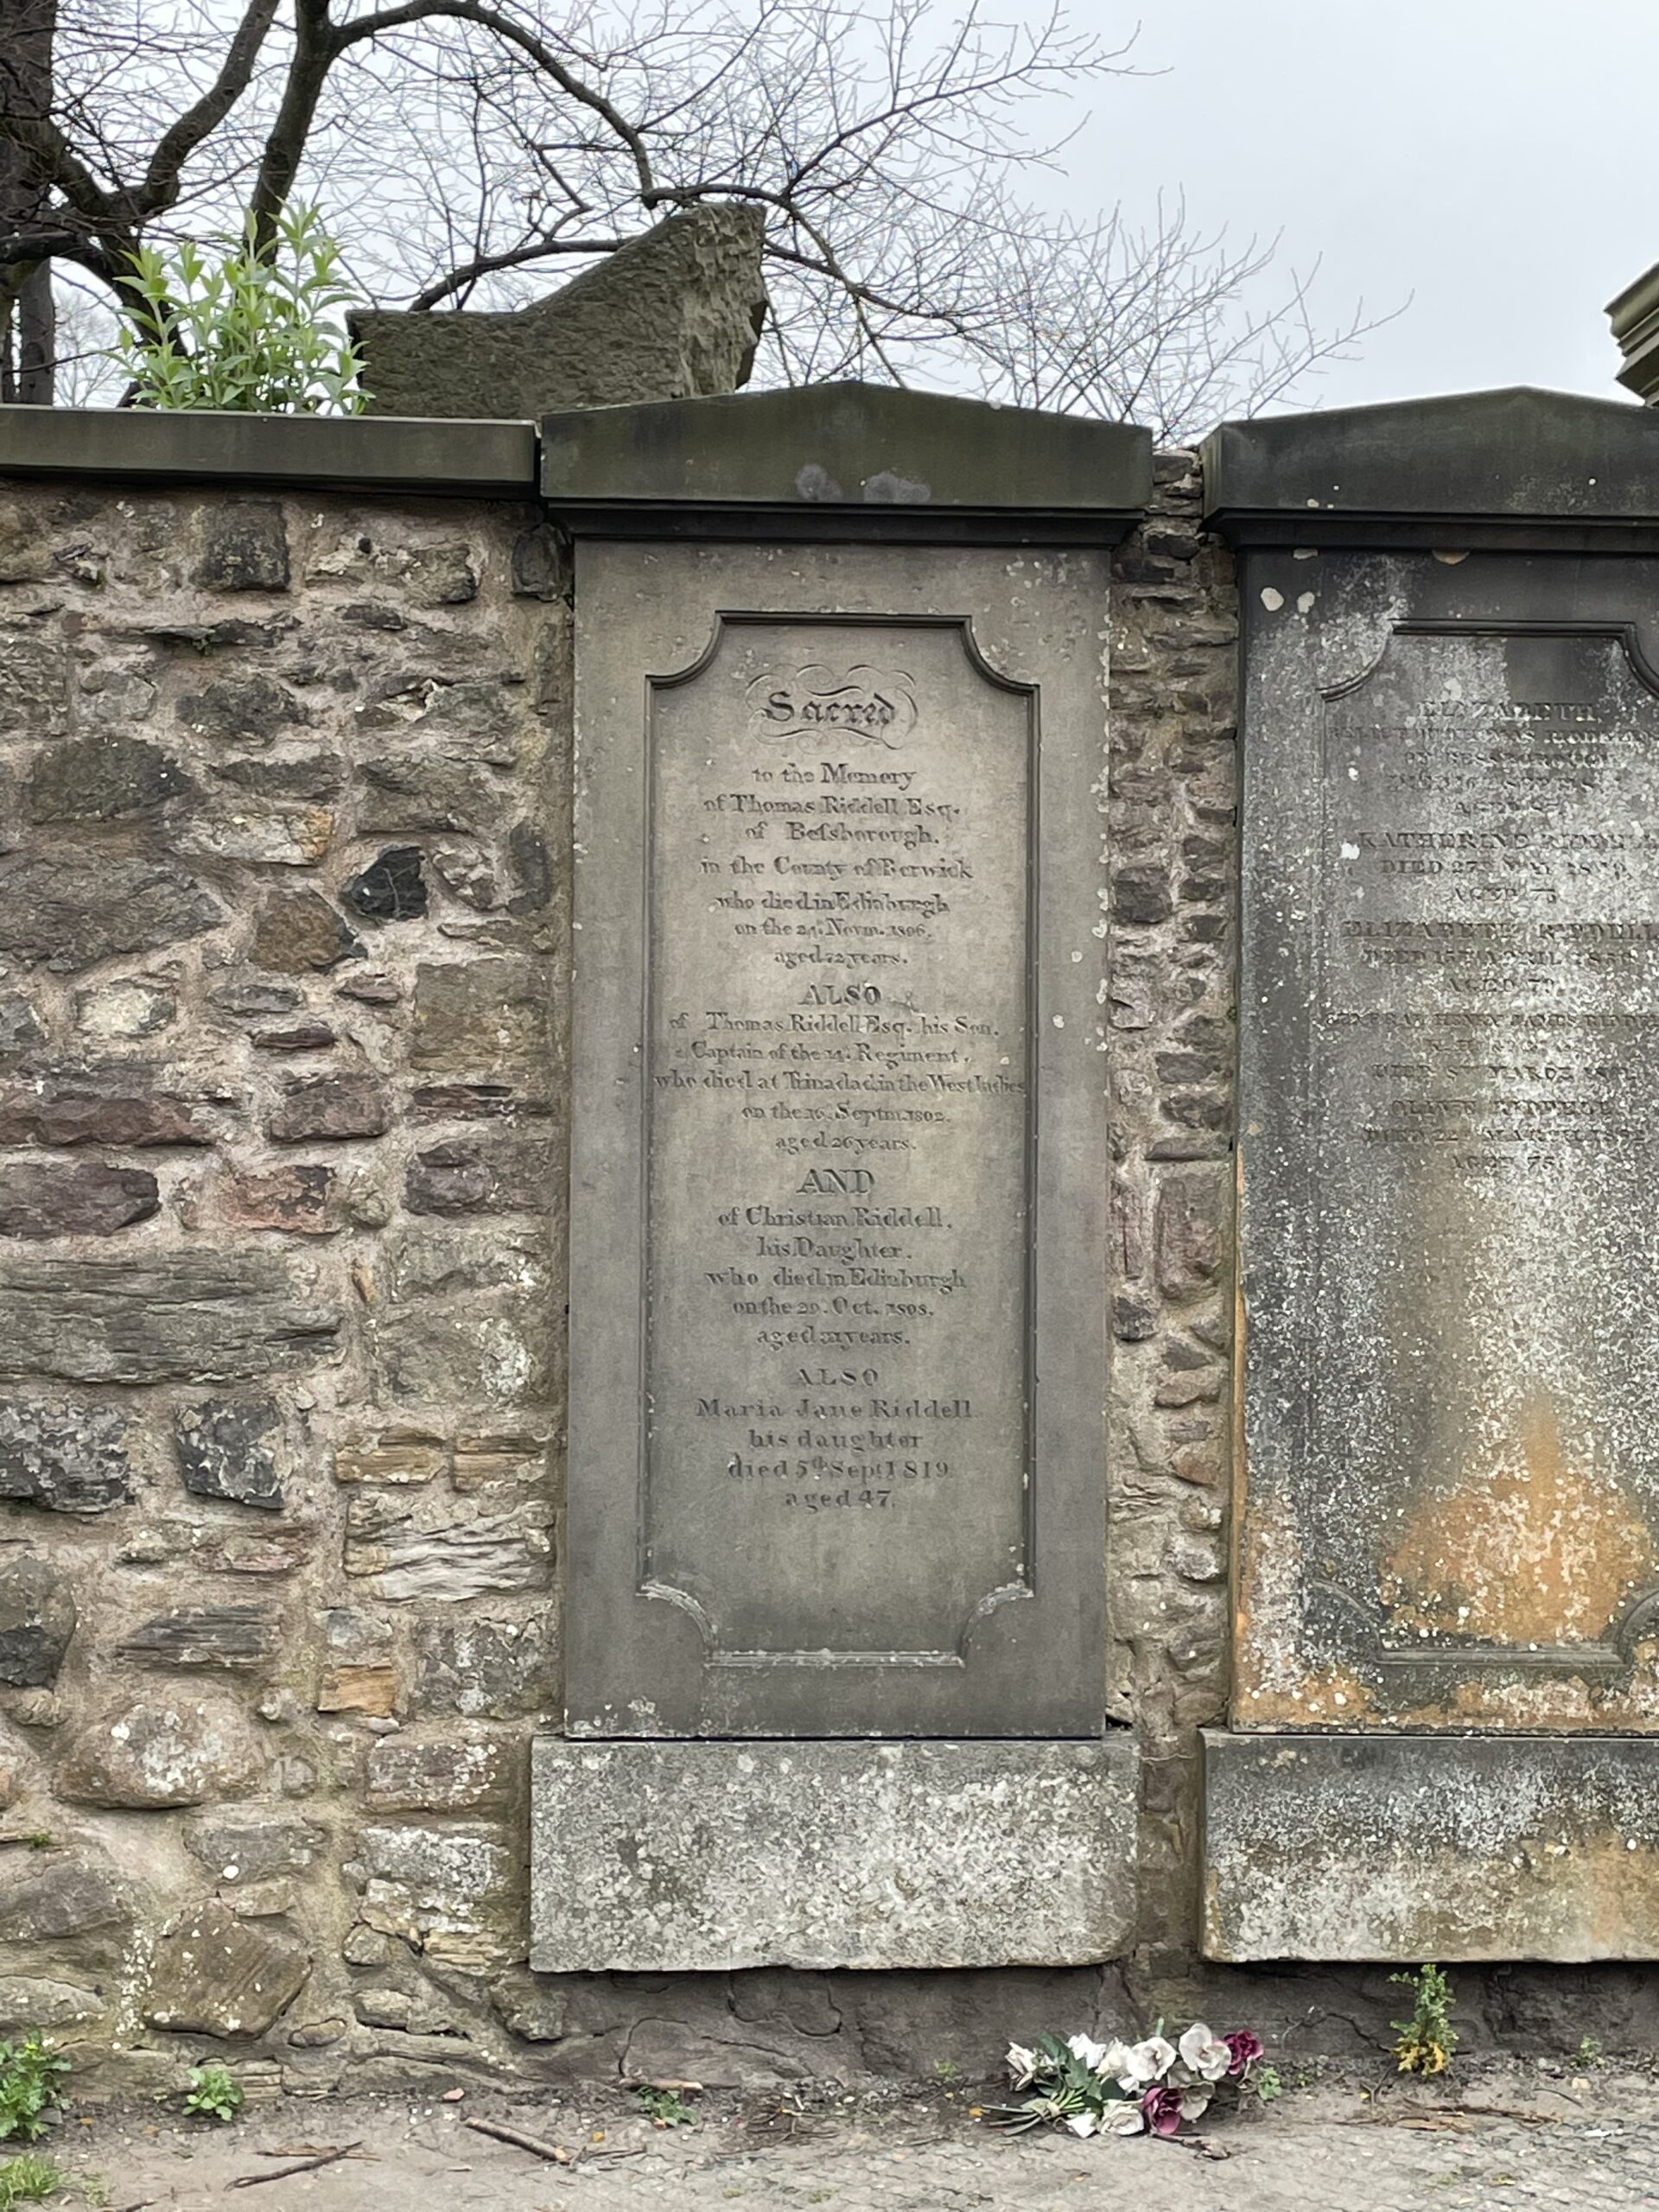 Visit the famous tombstones at Greyfriar's Kirkyard.